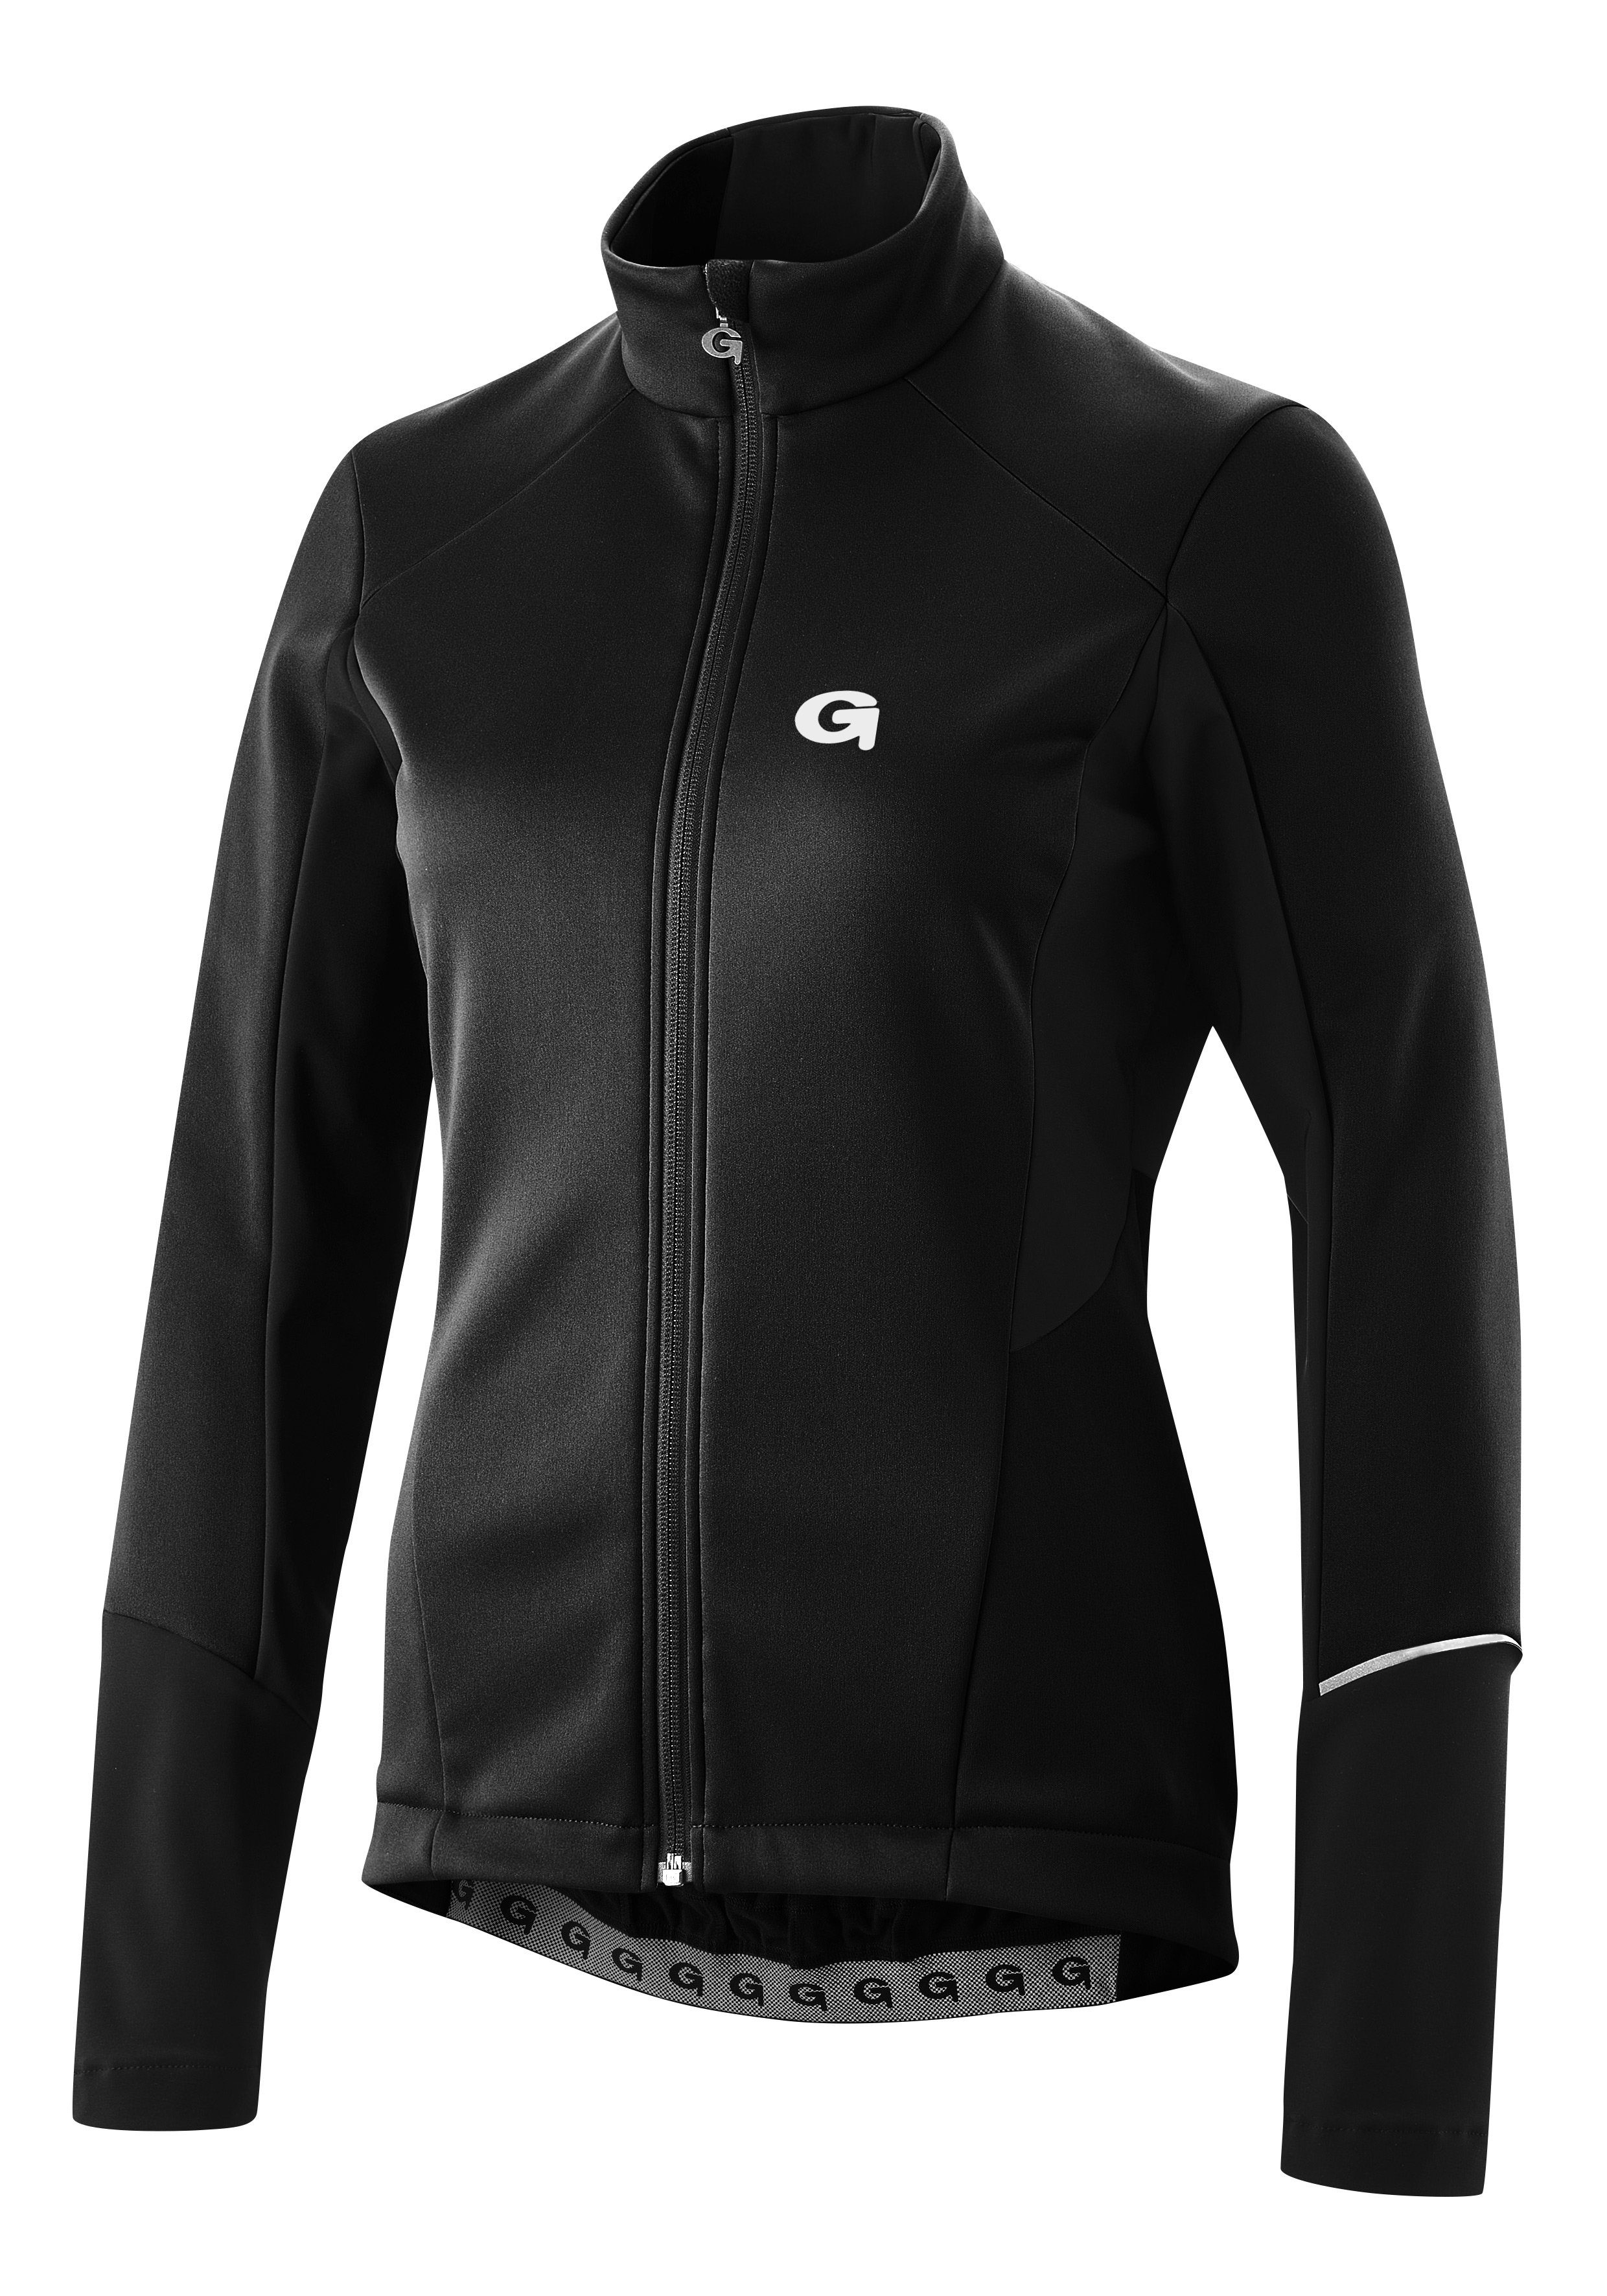 Softshell-Jacke, Windjacke atmungsaktiv Damen schwarz FURIANI Gonso und Fahrradjacke wasserabweisend